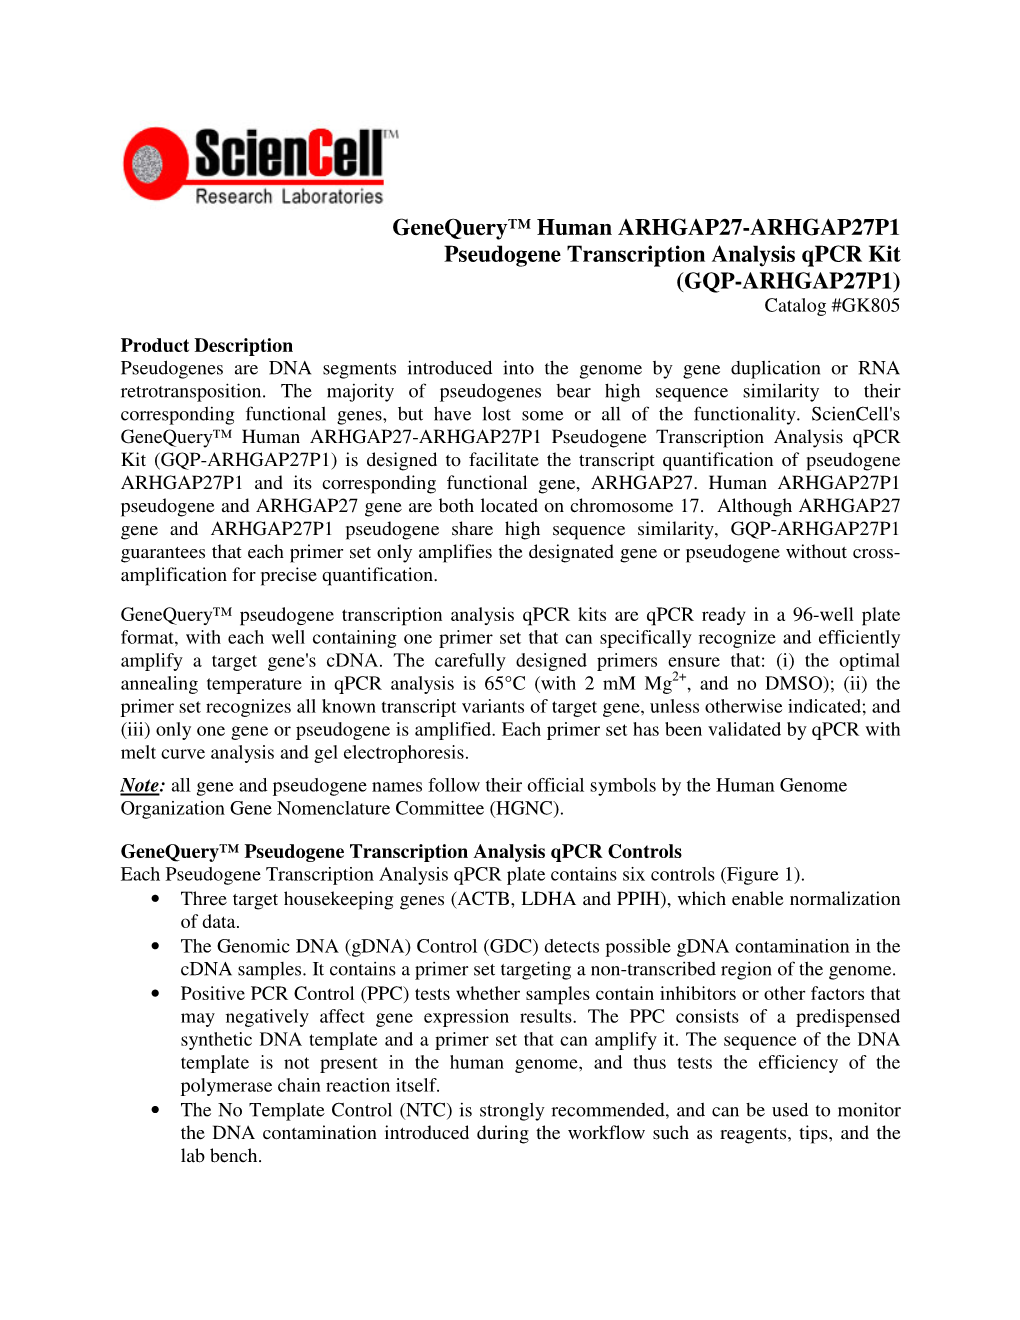 Genequery™ Human ARHGAP27-ARHGAP27P1 Pseudogene Transcription Analysis Qpcr Kit (GQP-ARHGAP27P1)